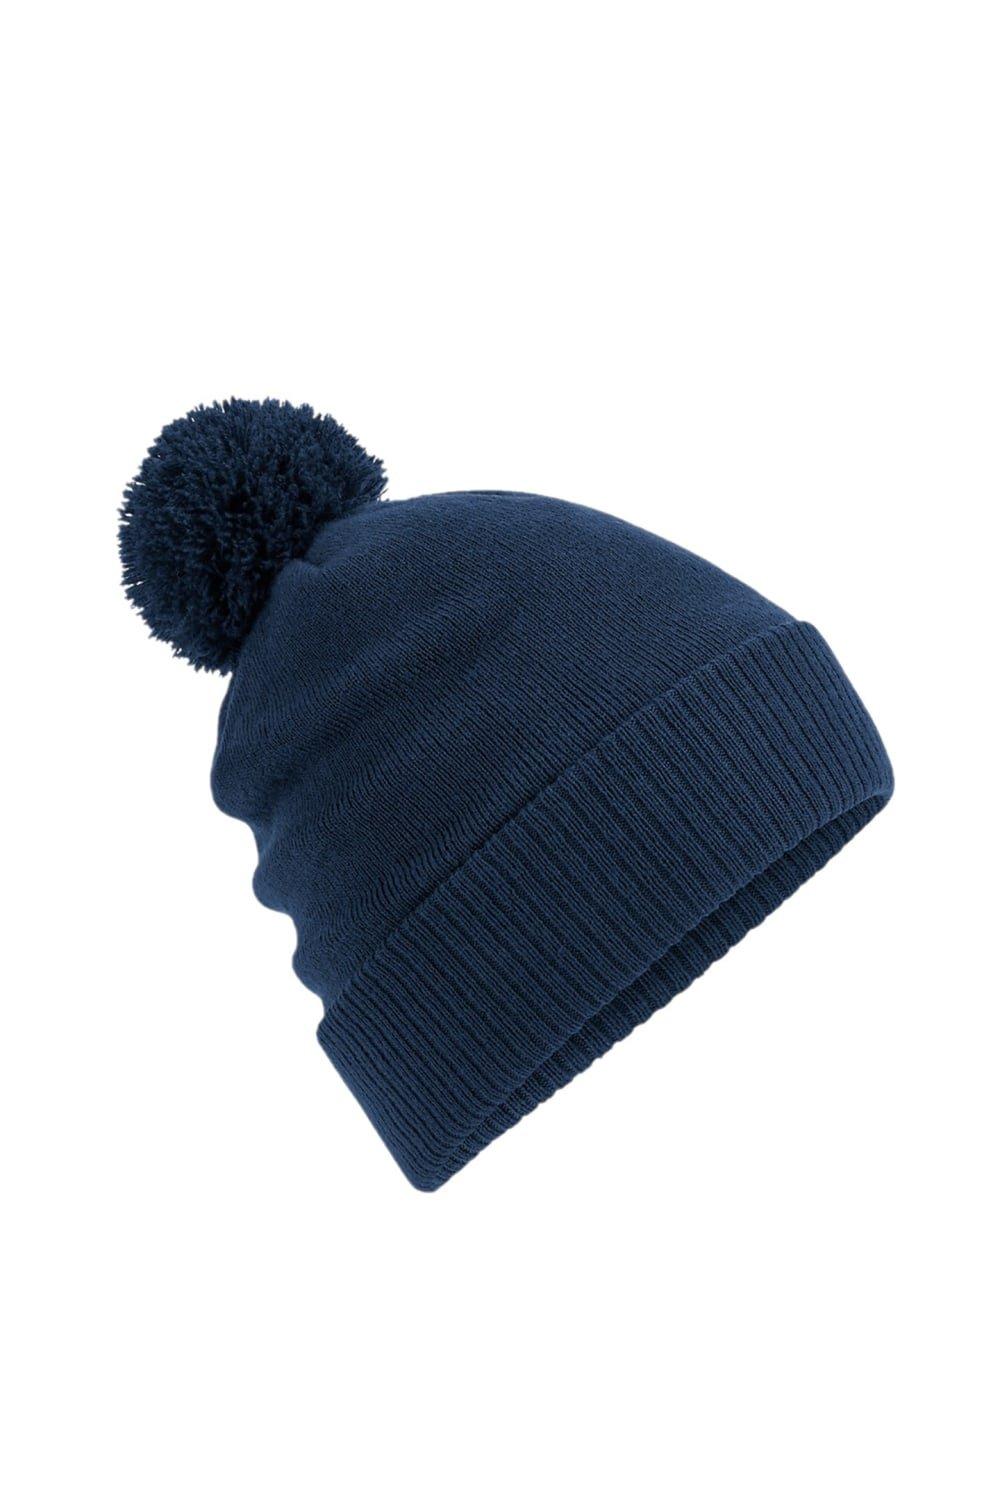 Тепловая шапка Snowstar Beechfield, темно-синий